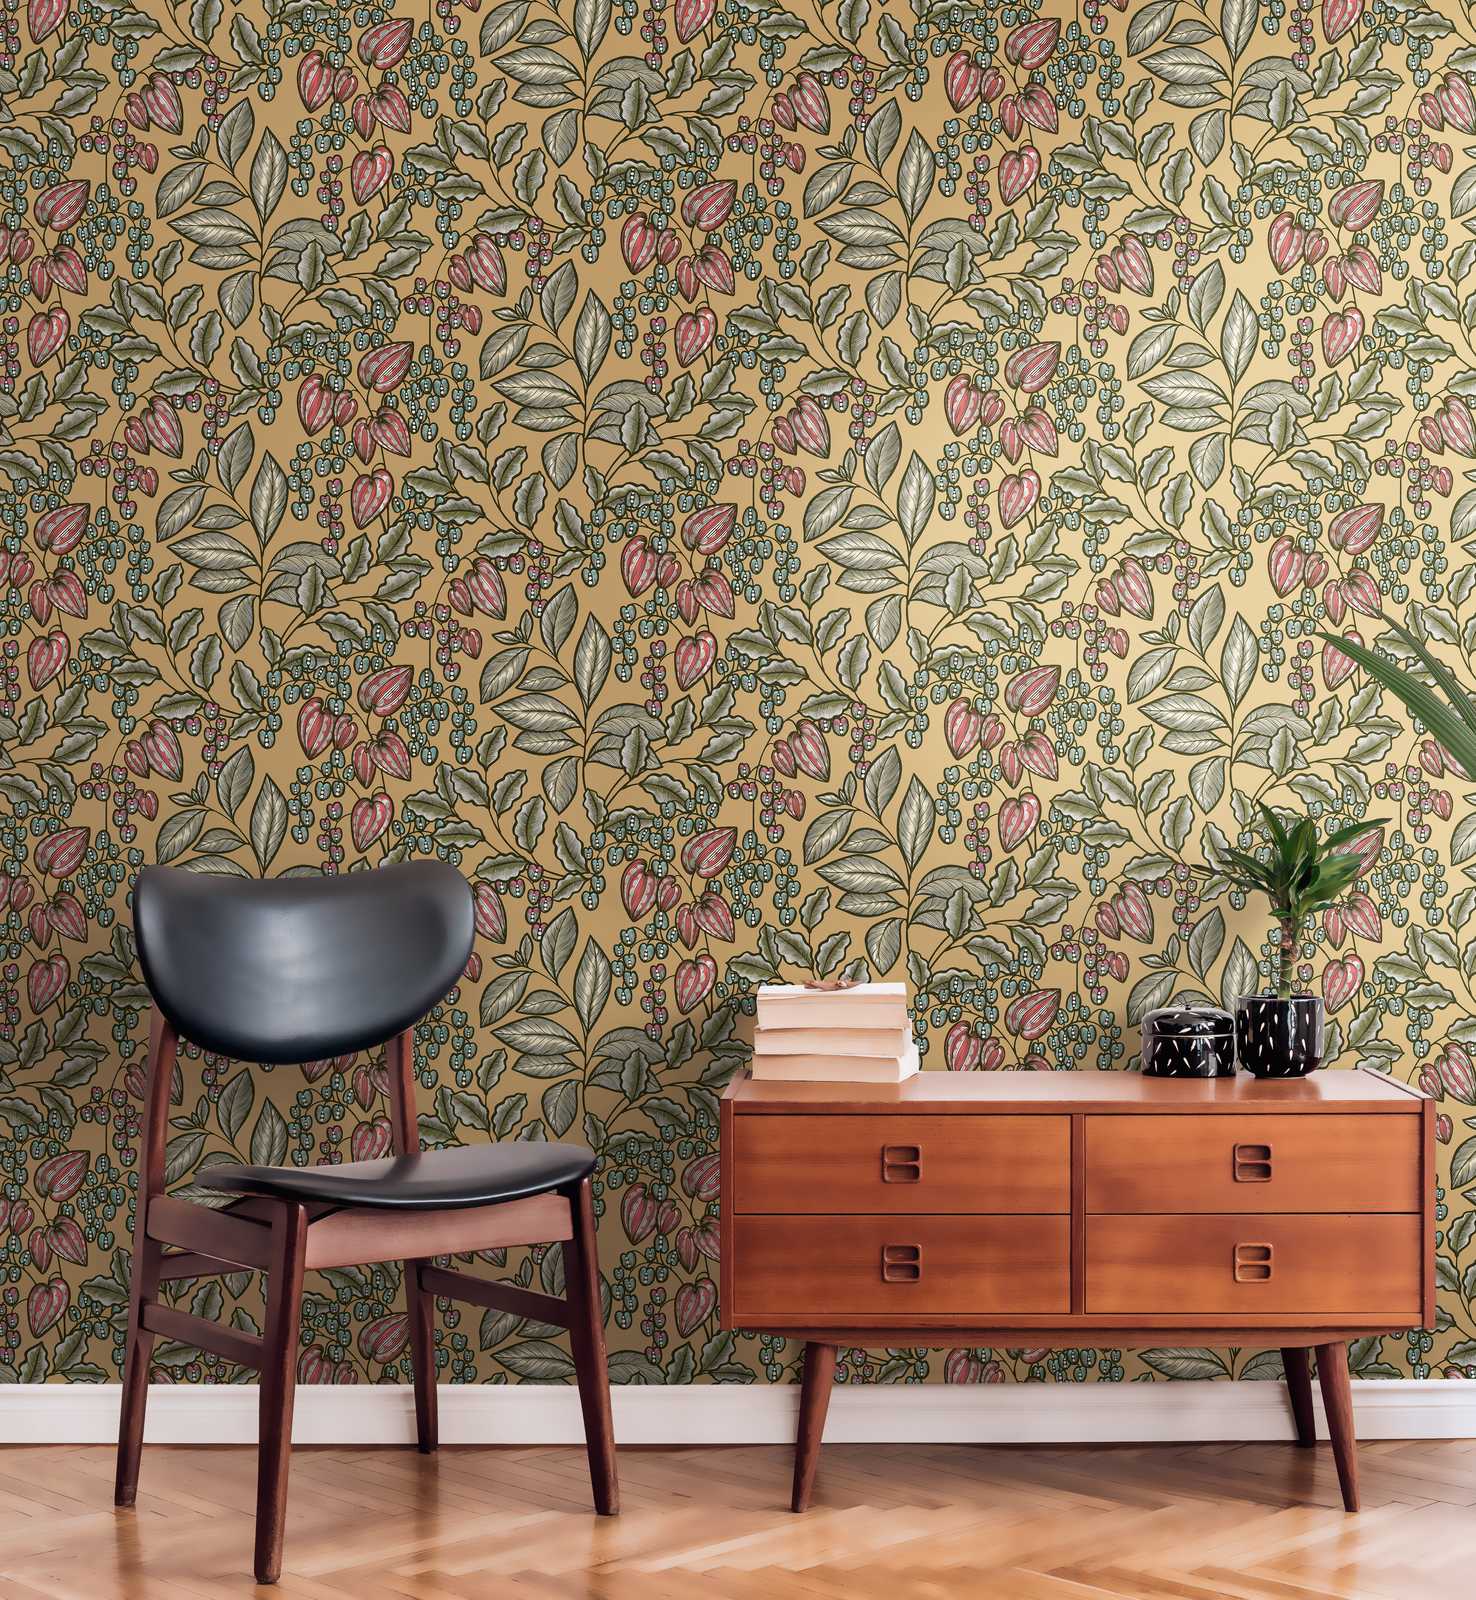             Floral wallpaper modern leaves pattern in Scandi style - yellow, green, blue
        